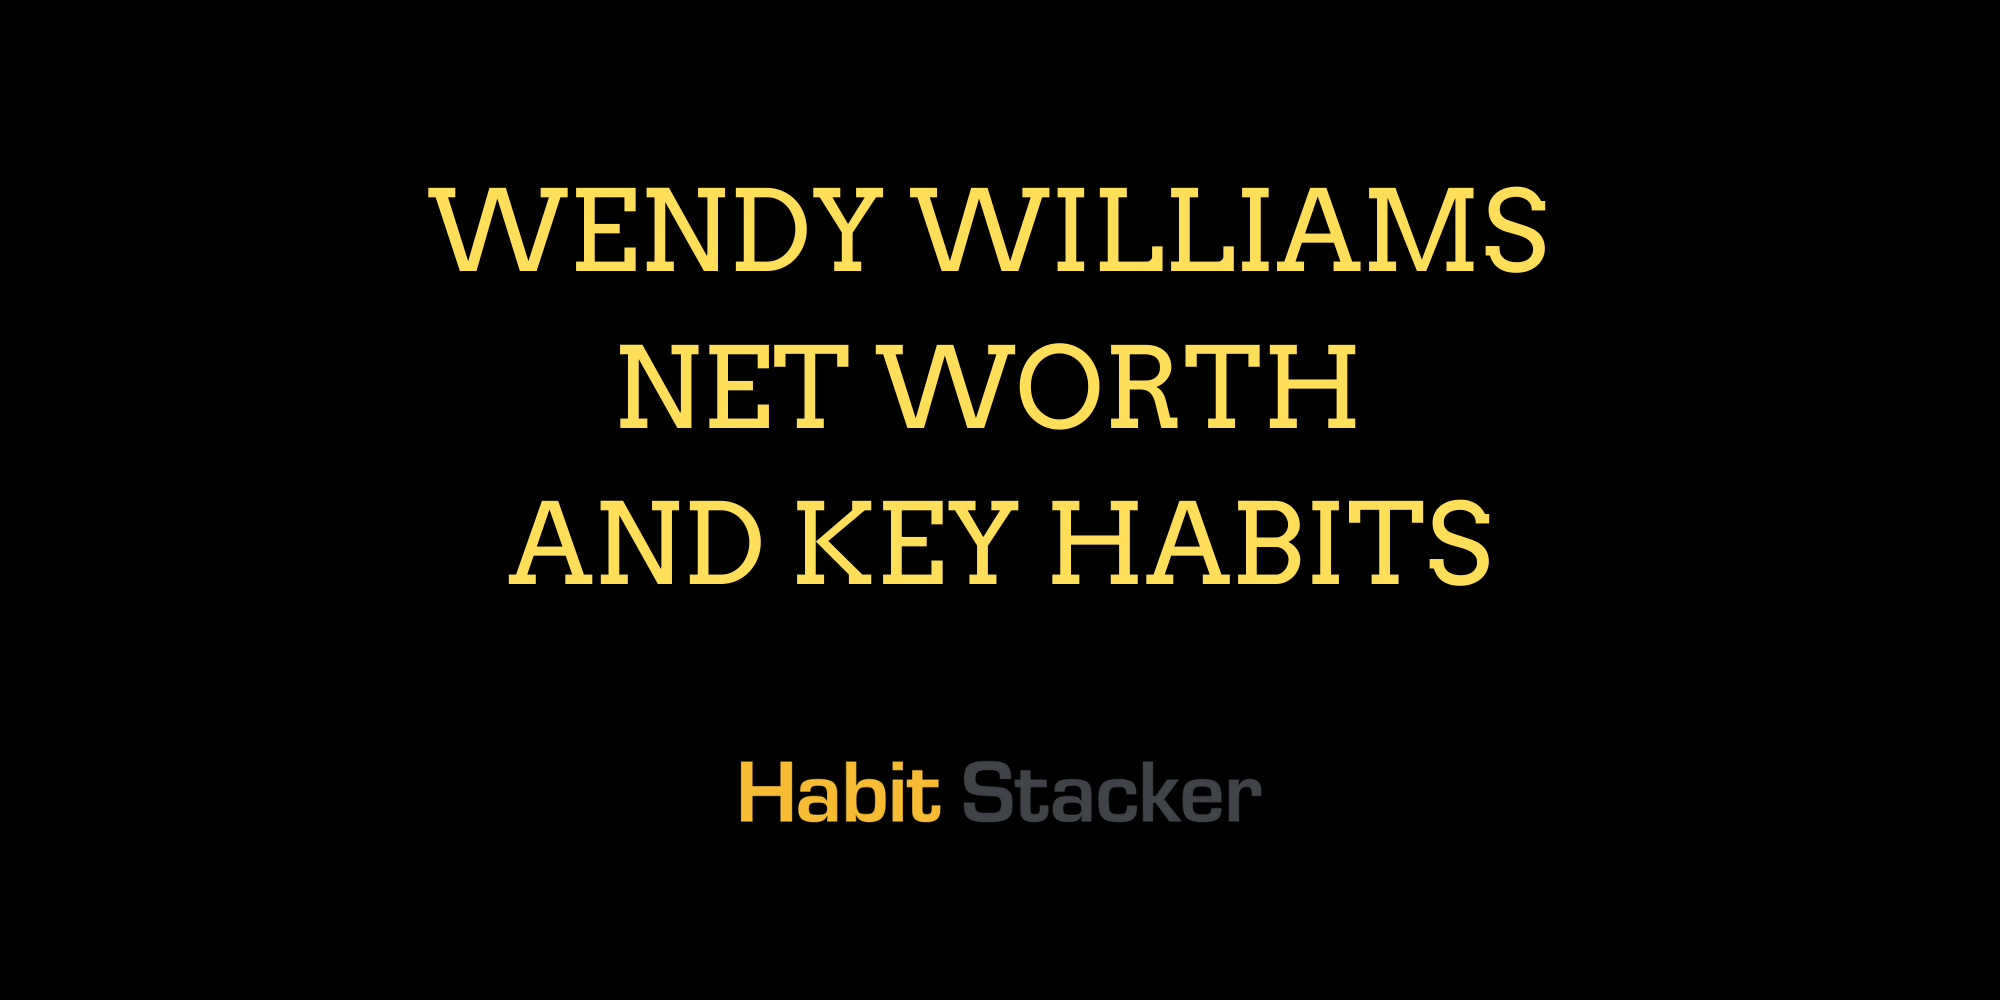 Wendy Williams Net Worth and Key Habits